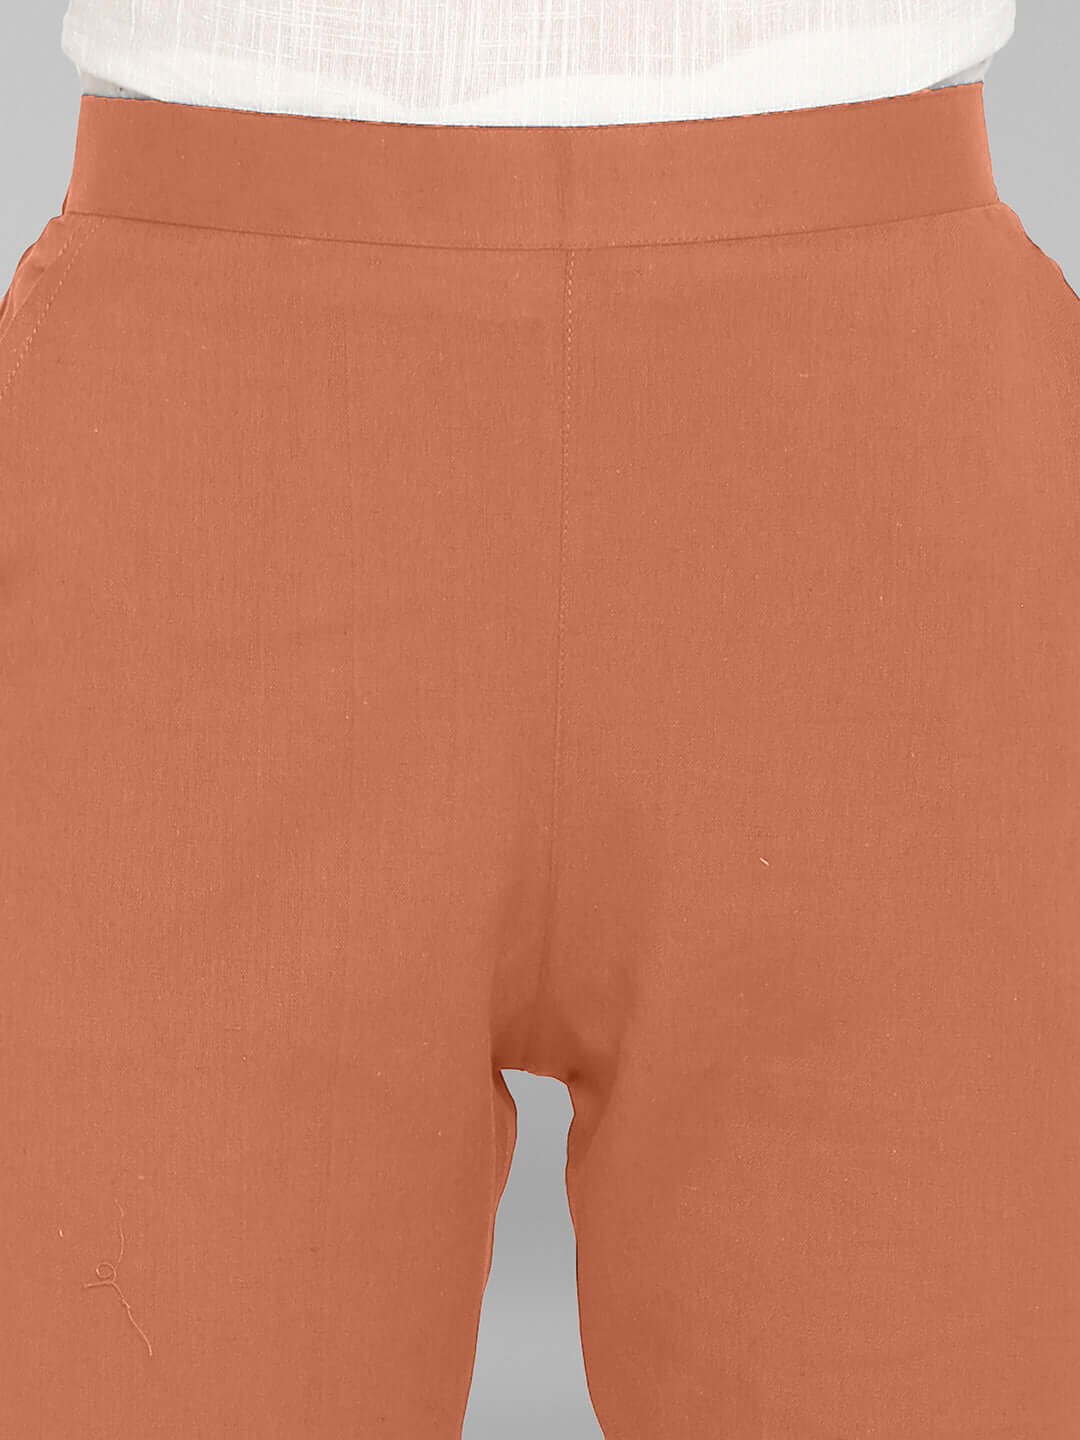 Peach Cotton Solid Casual Pant Janasya